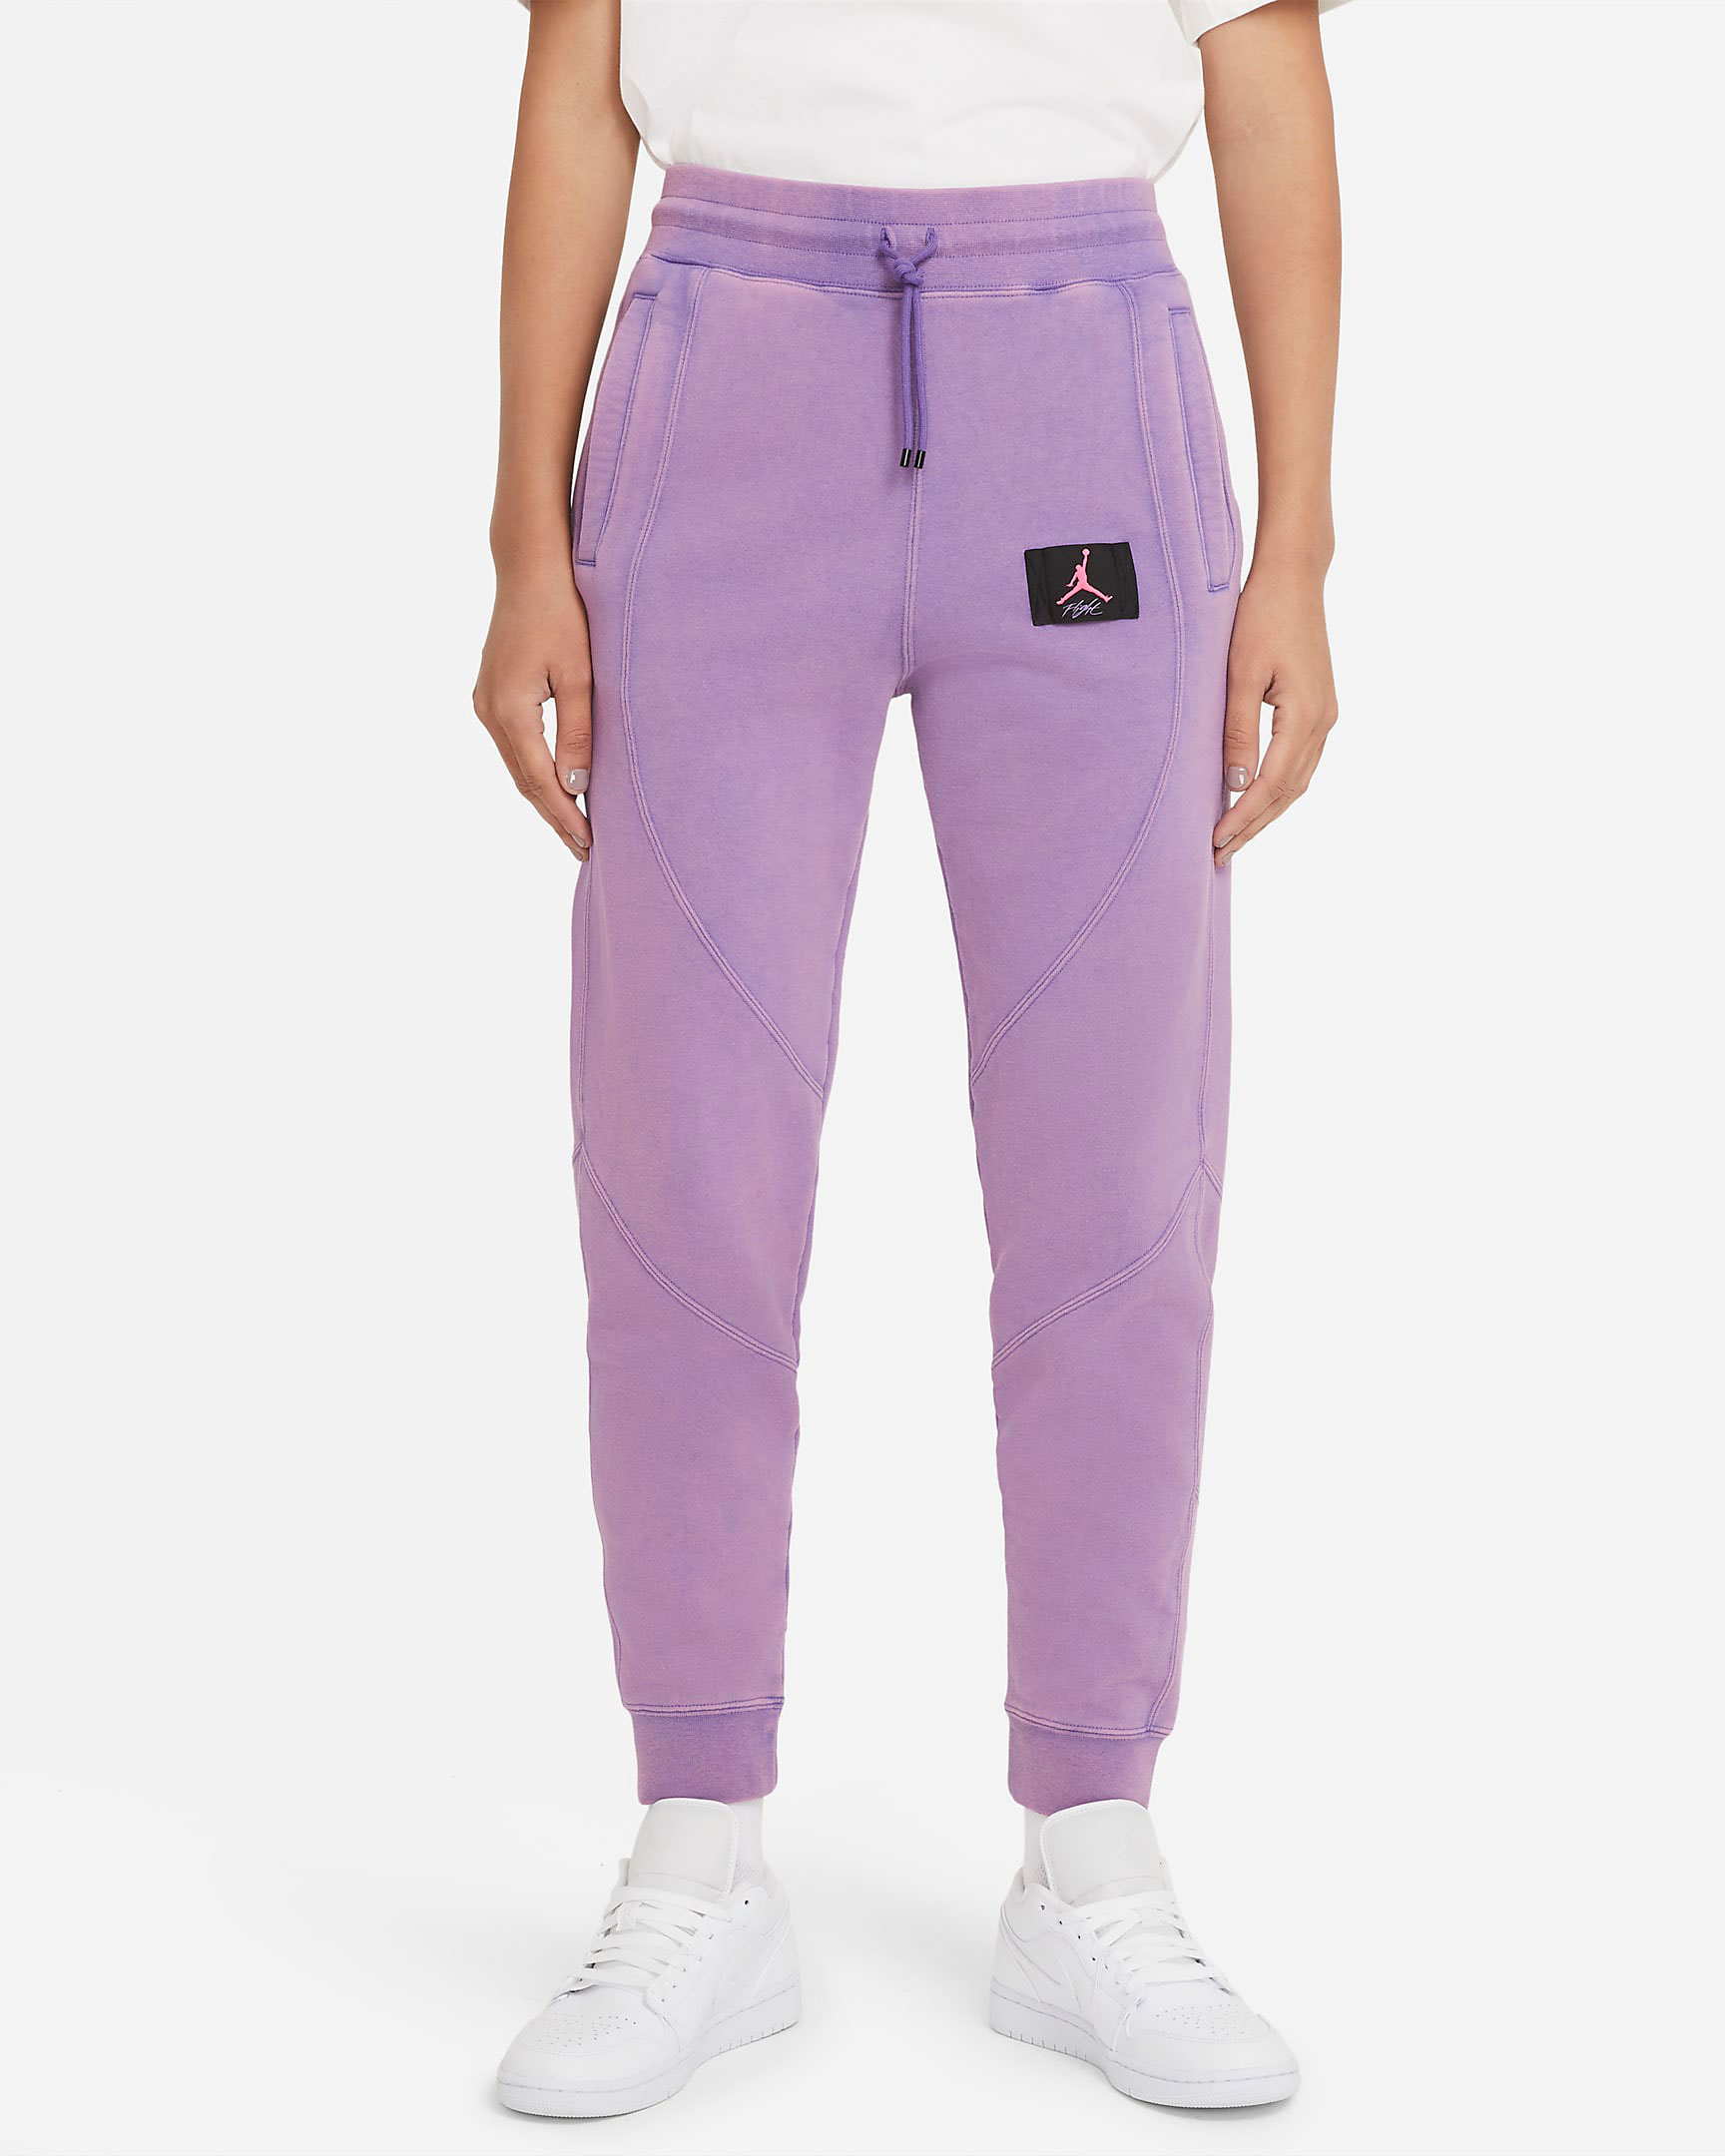 jordan-flight-womens-pants-purple-pink